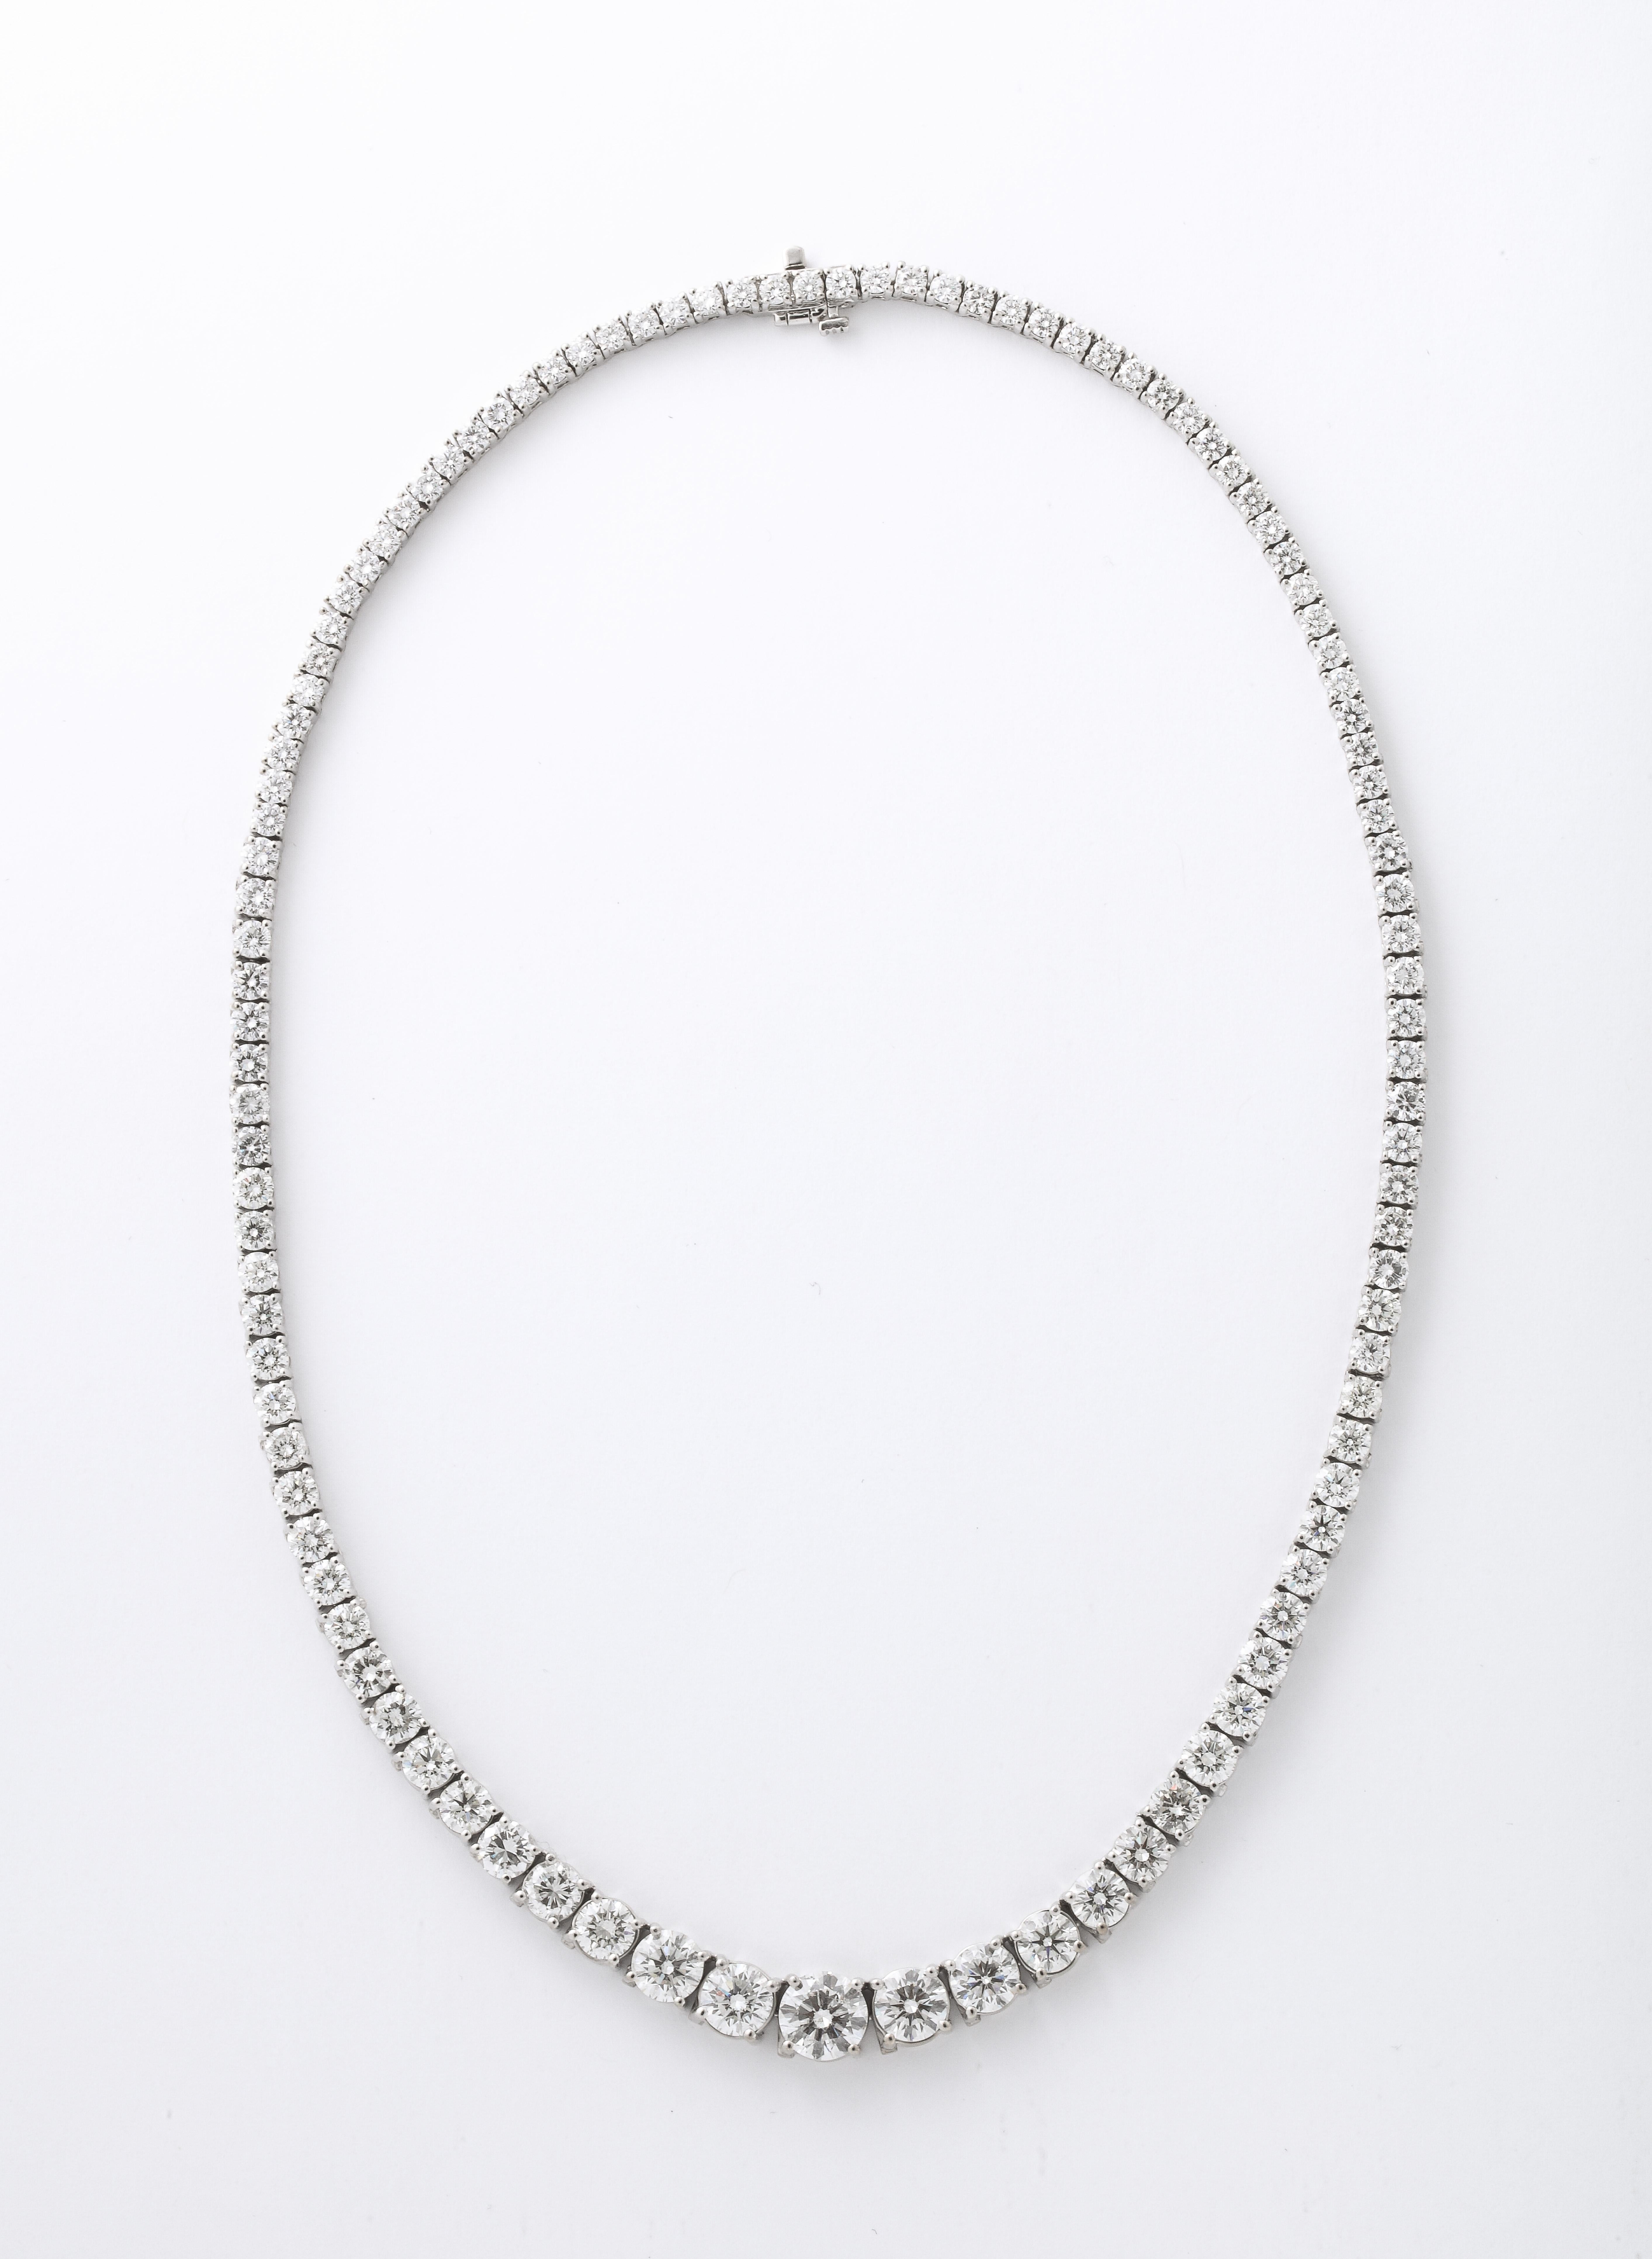 30 carat tennis necklace